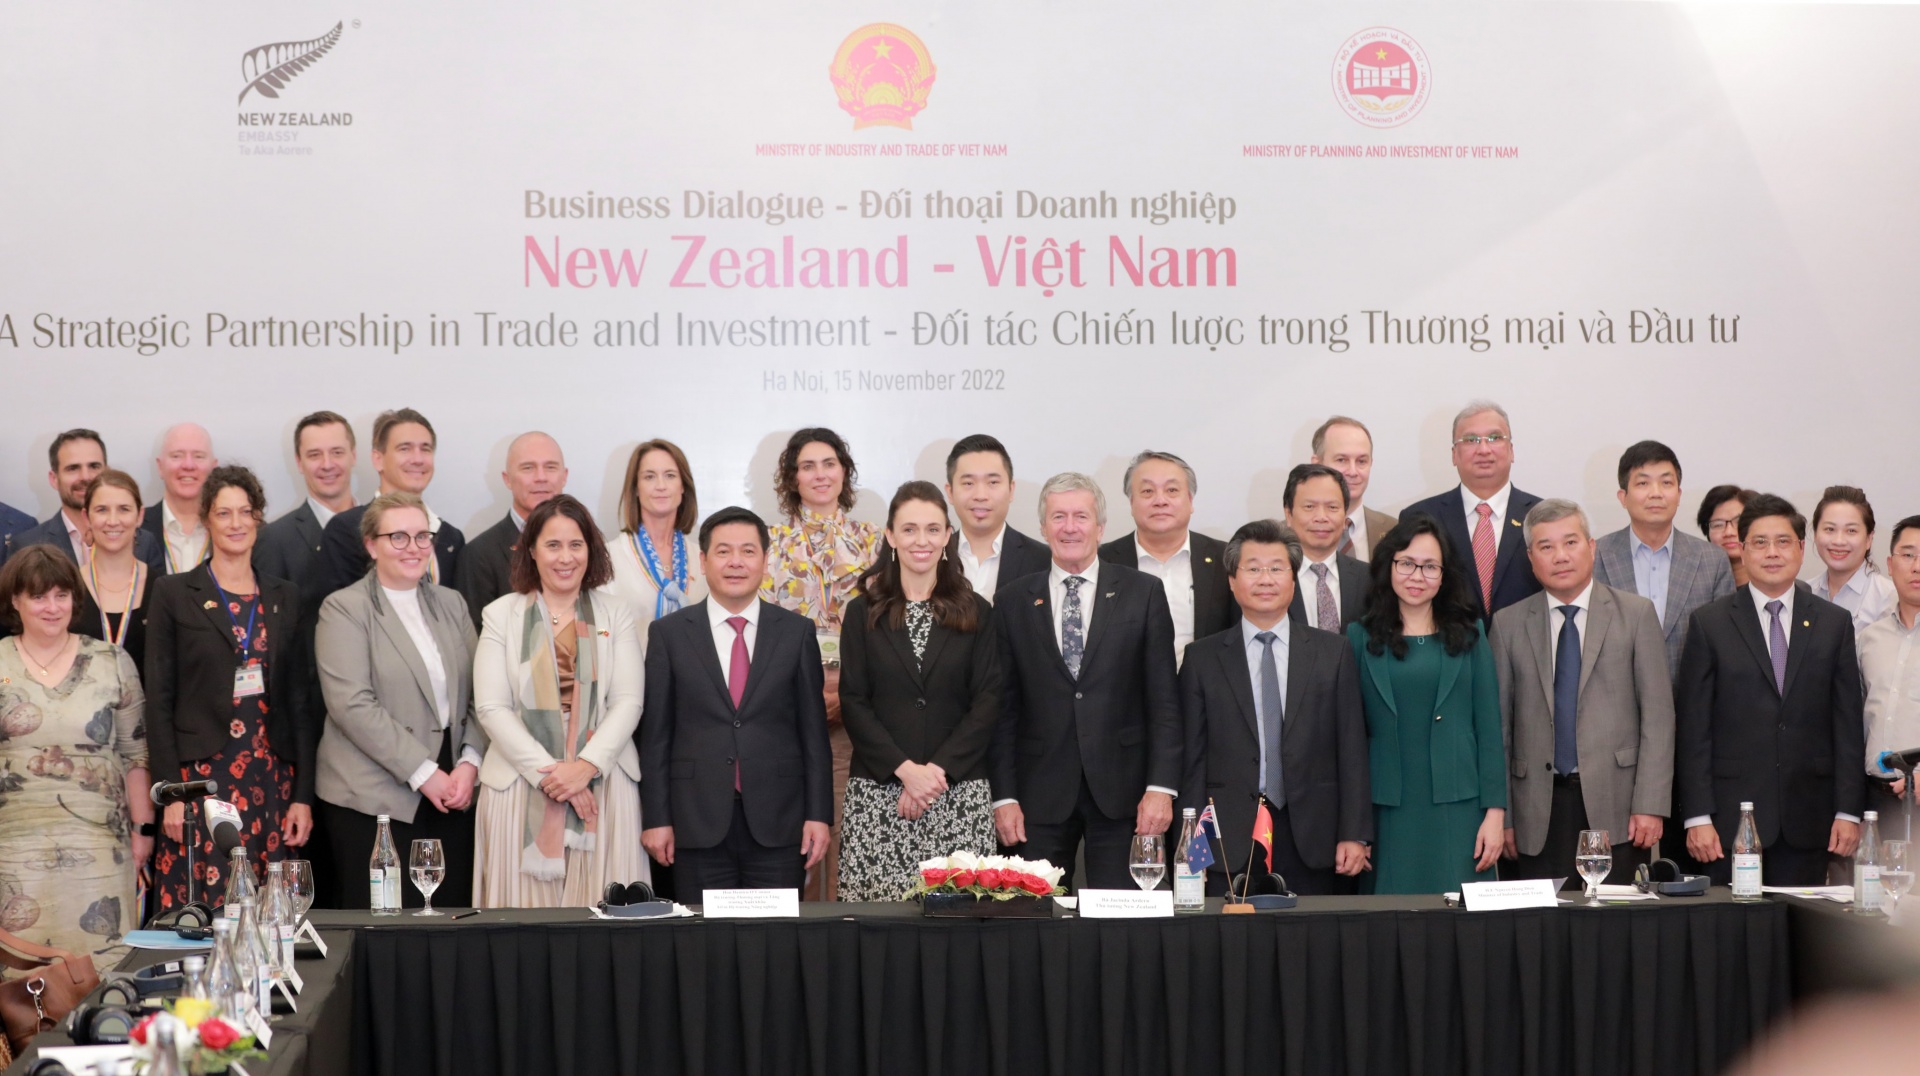 Promoting business cooperation between Vietnam and New Zealand